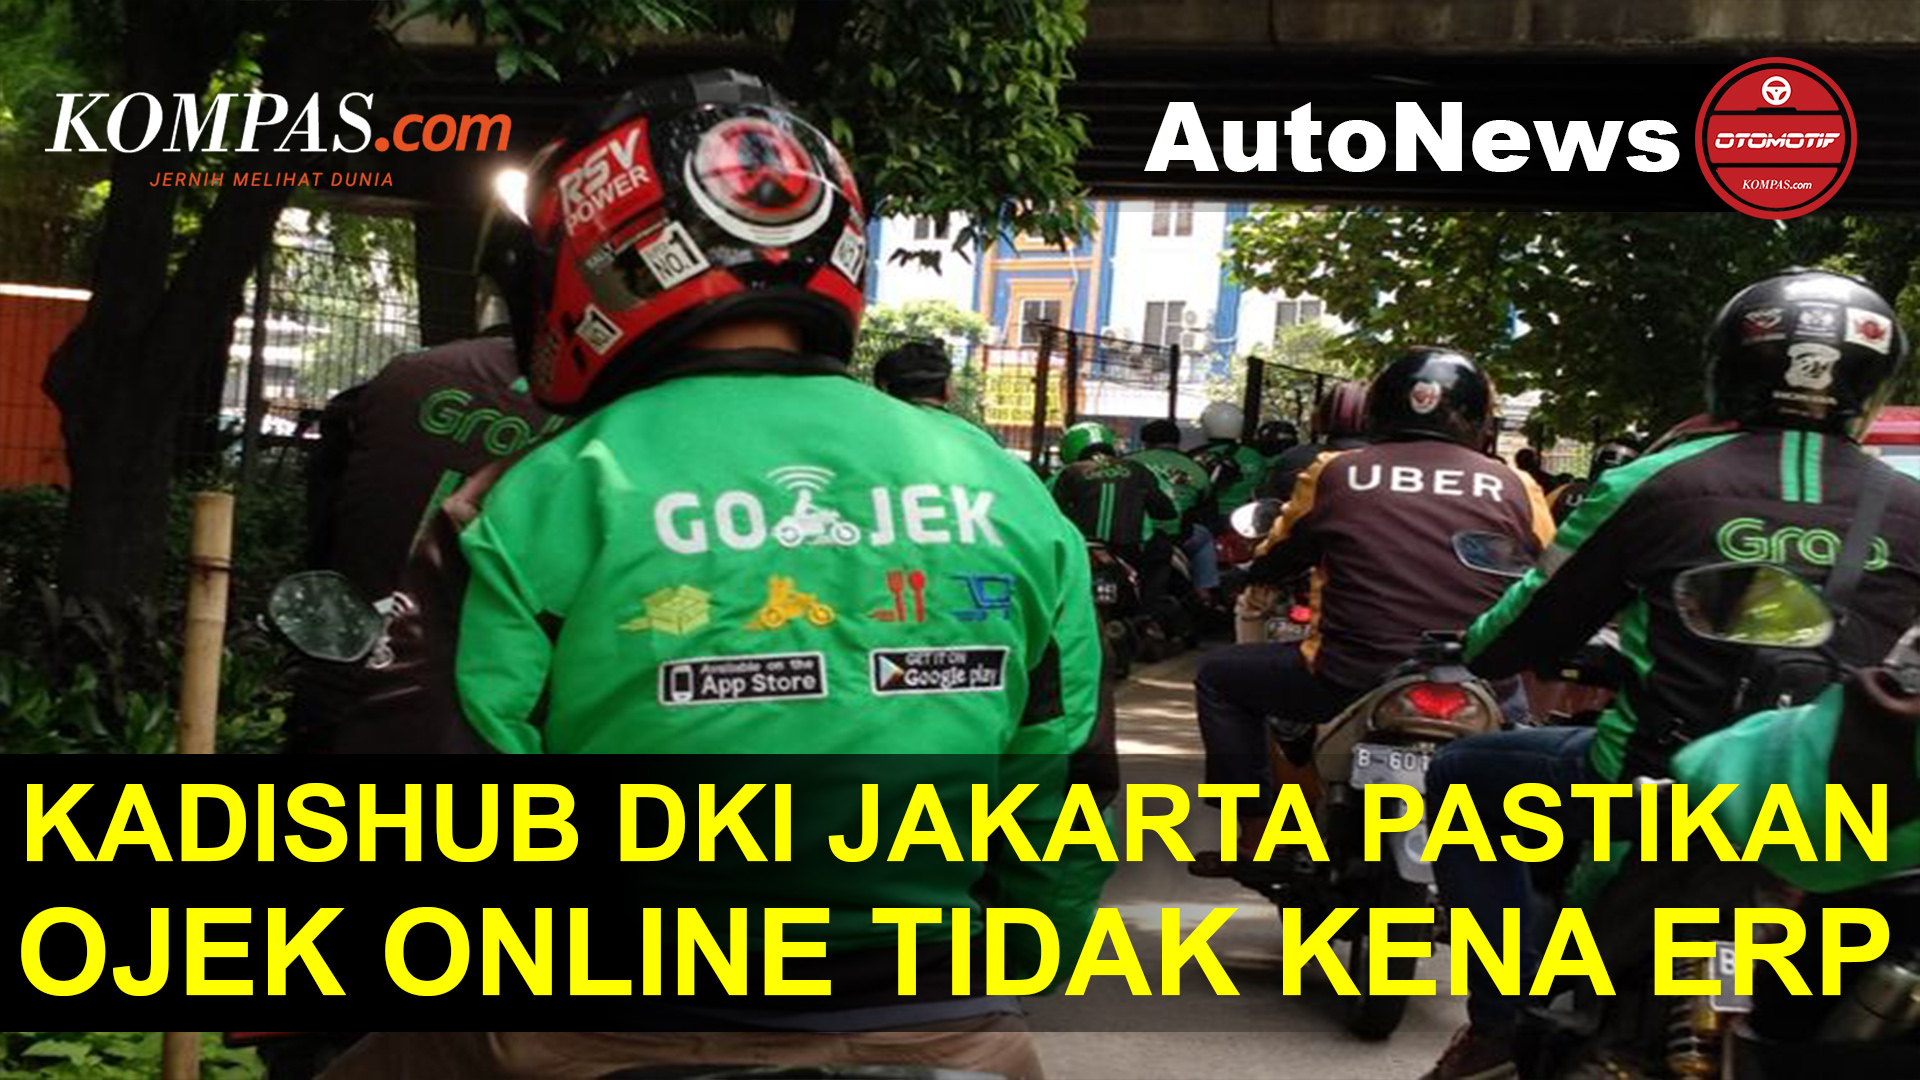 Kadishub DKI Jakarta Bilang Ojek Online Tidak Kena ERP